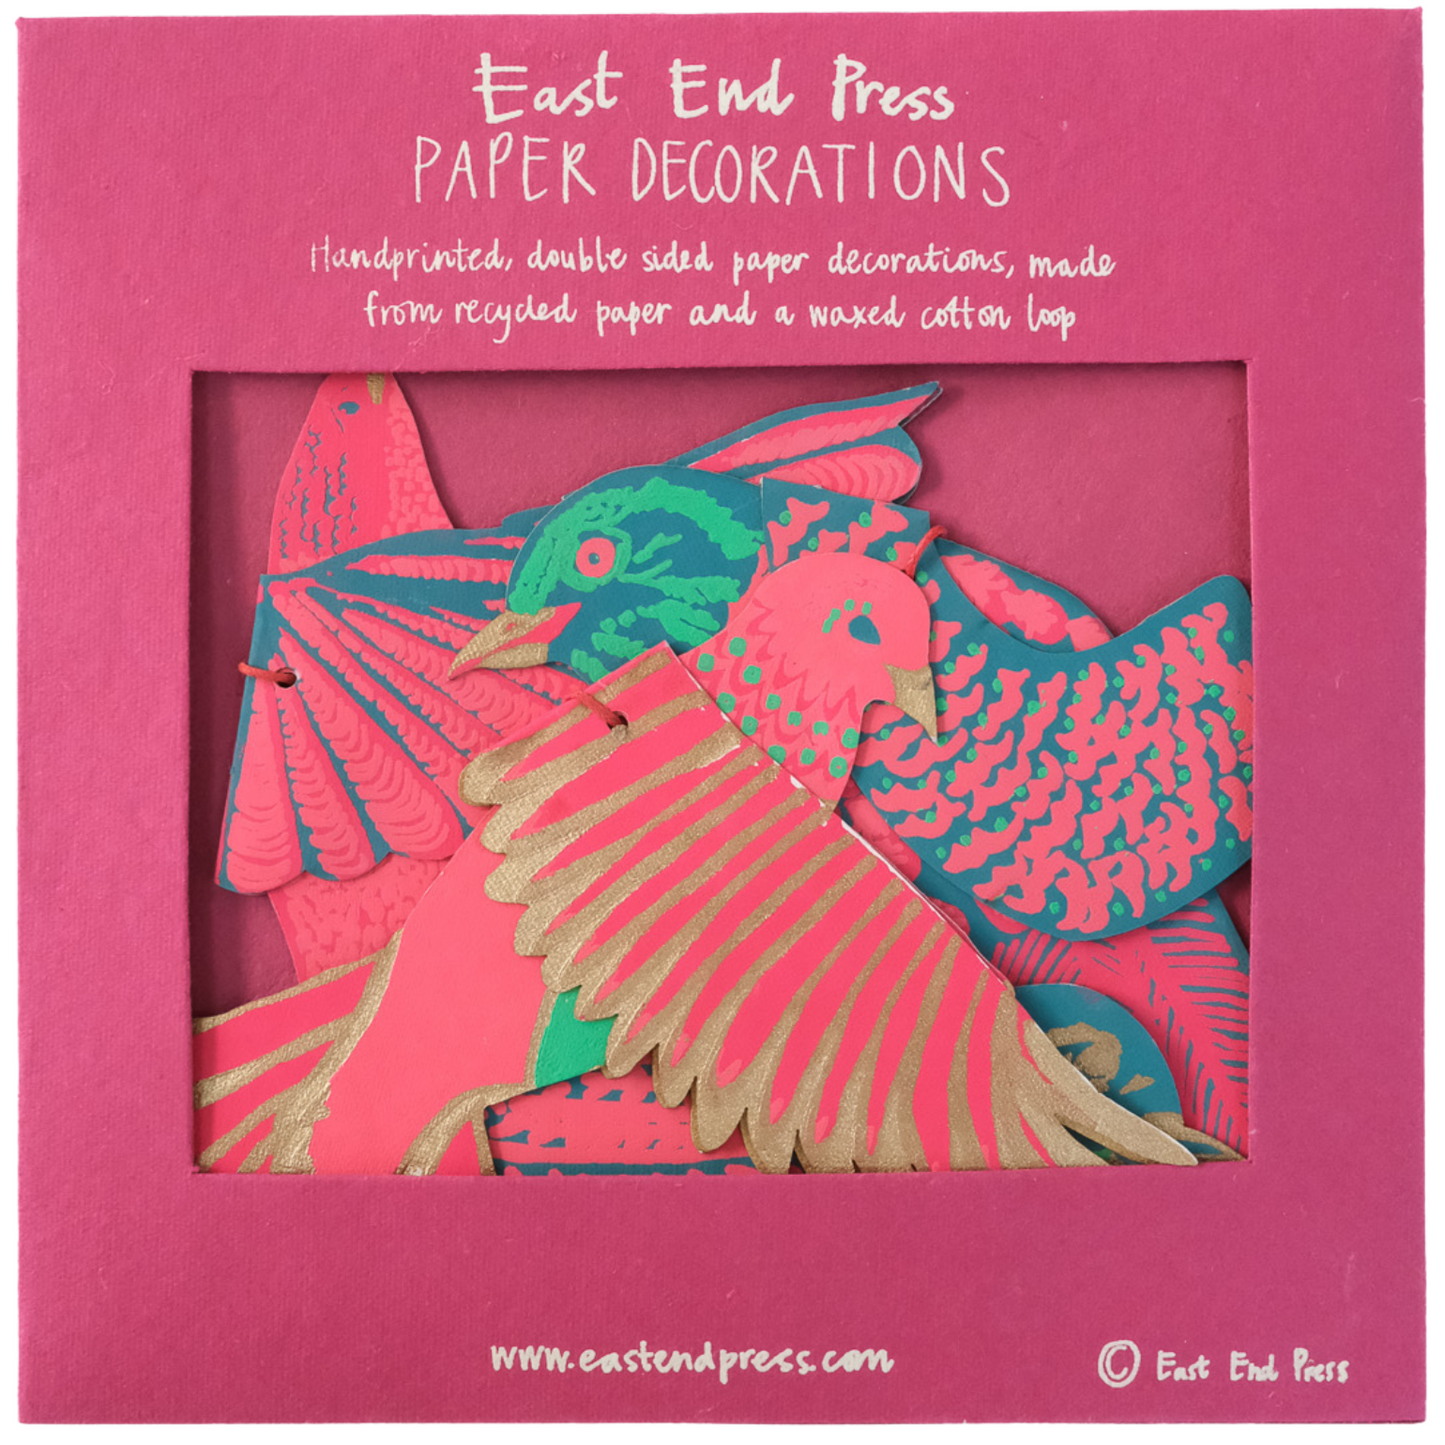 East End Press - Paper Bird Decorations